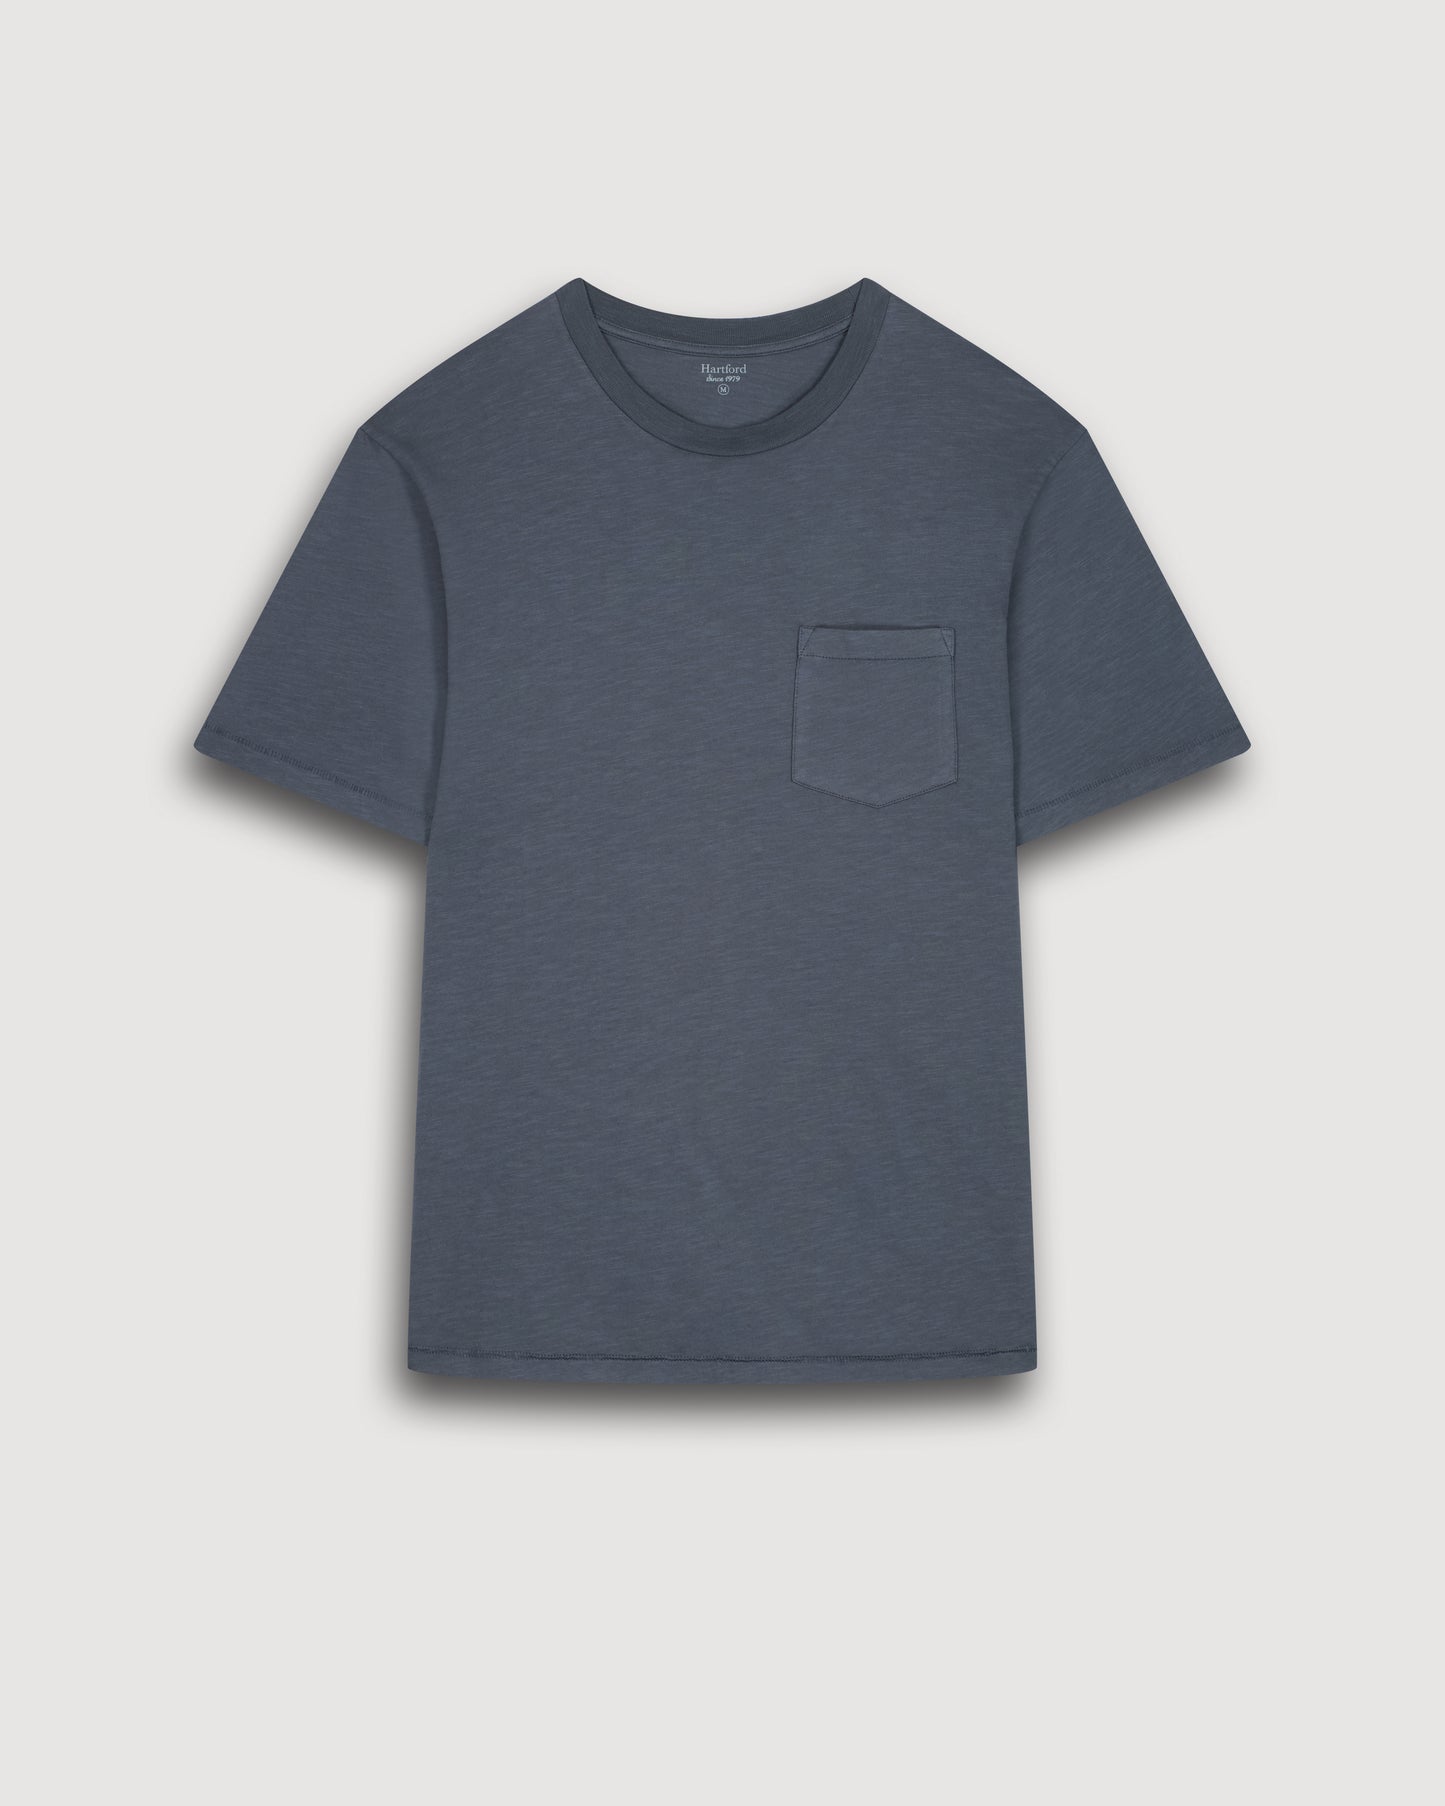 Tee shirt Homme en coton slub Carbone Pocket BC64302-02